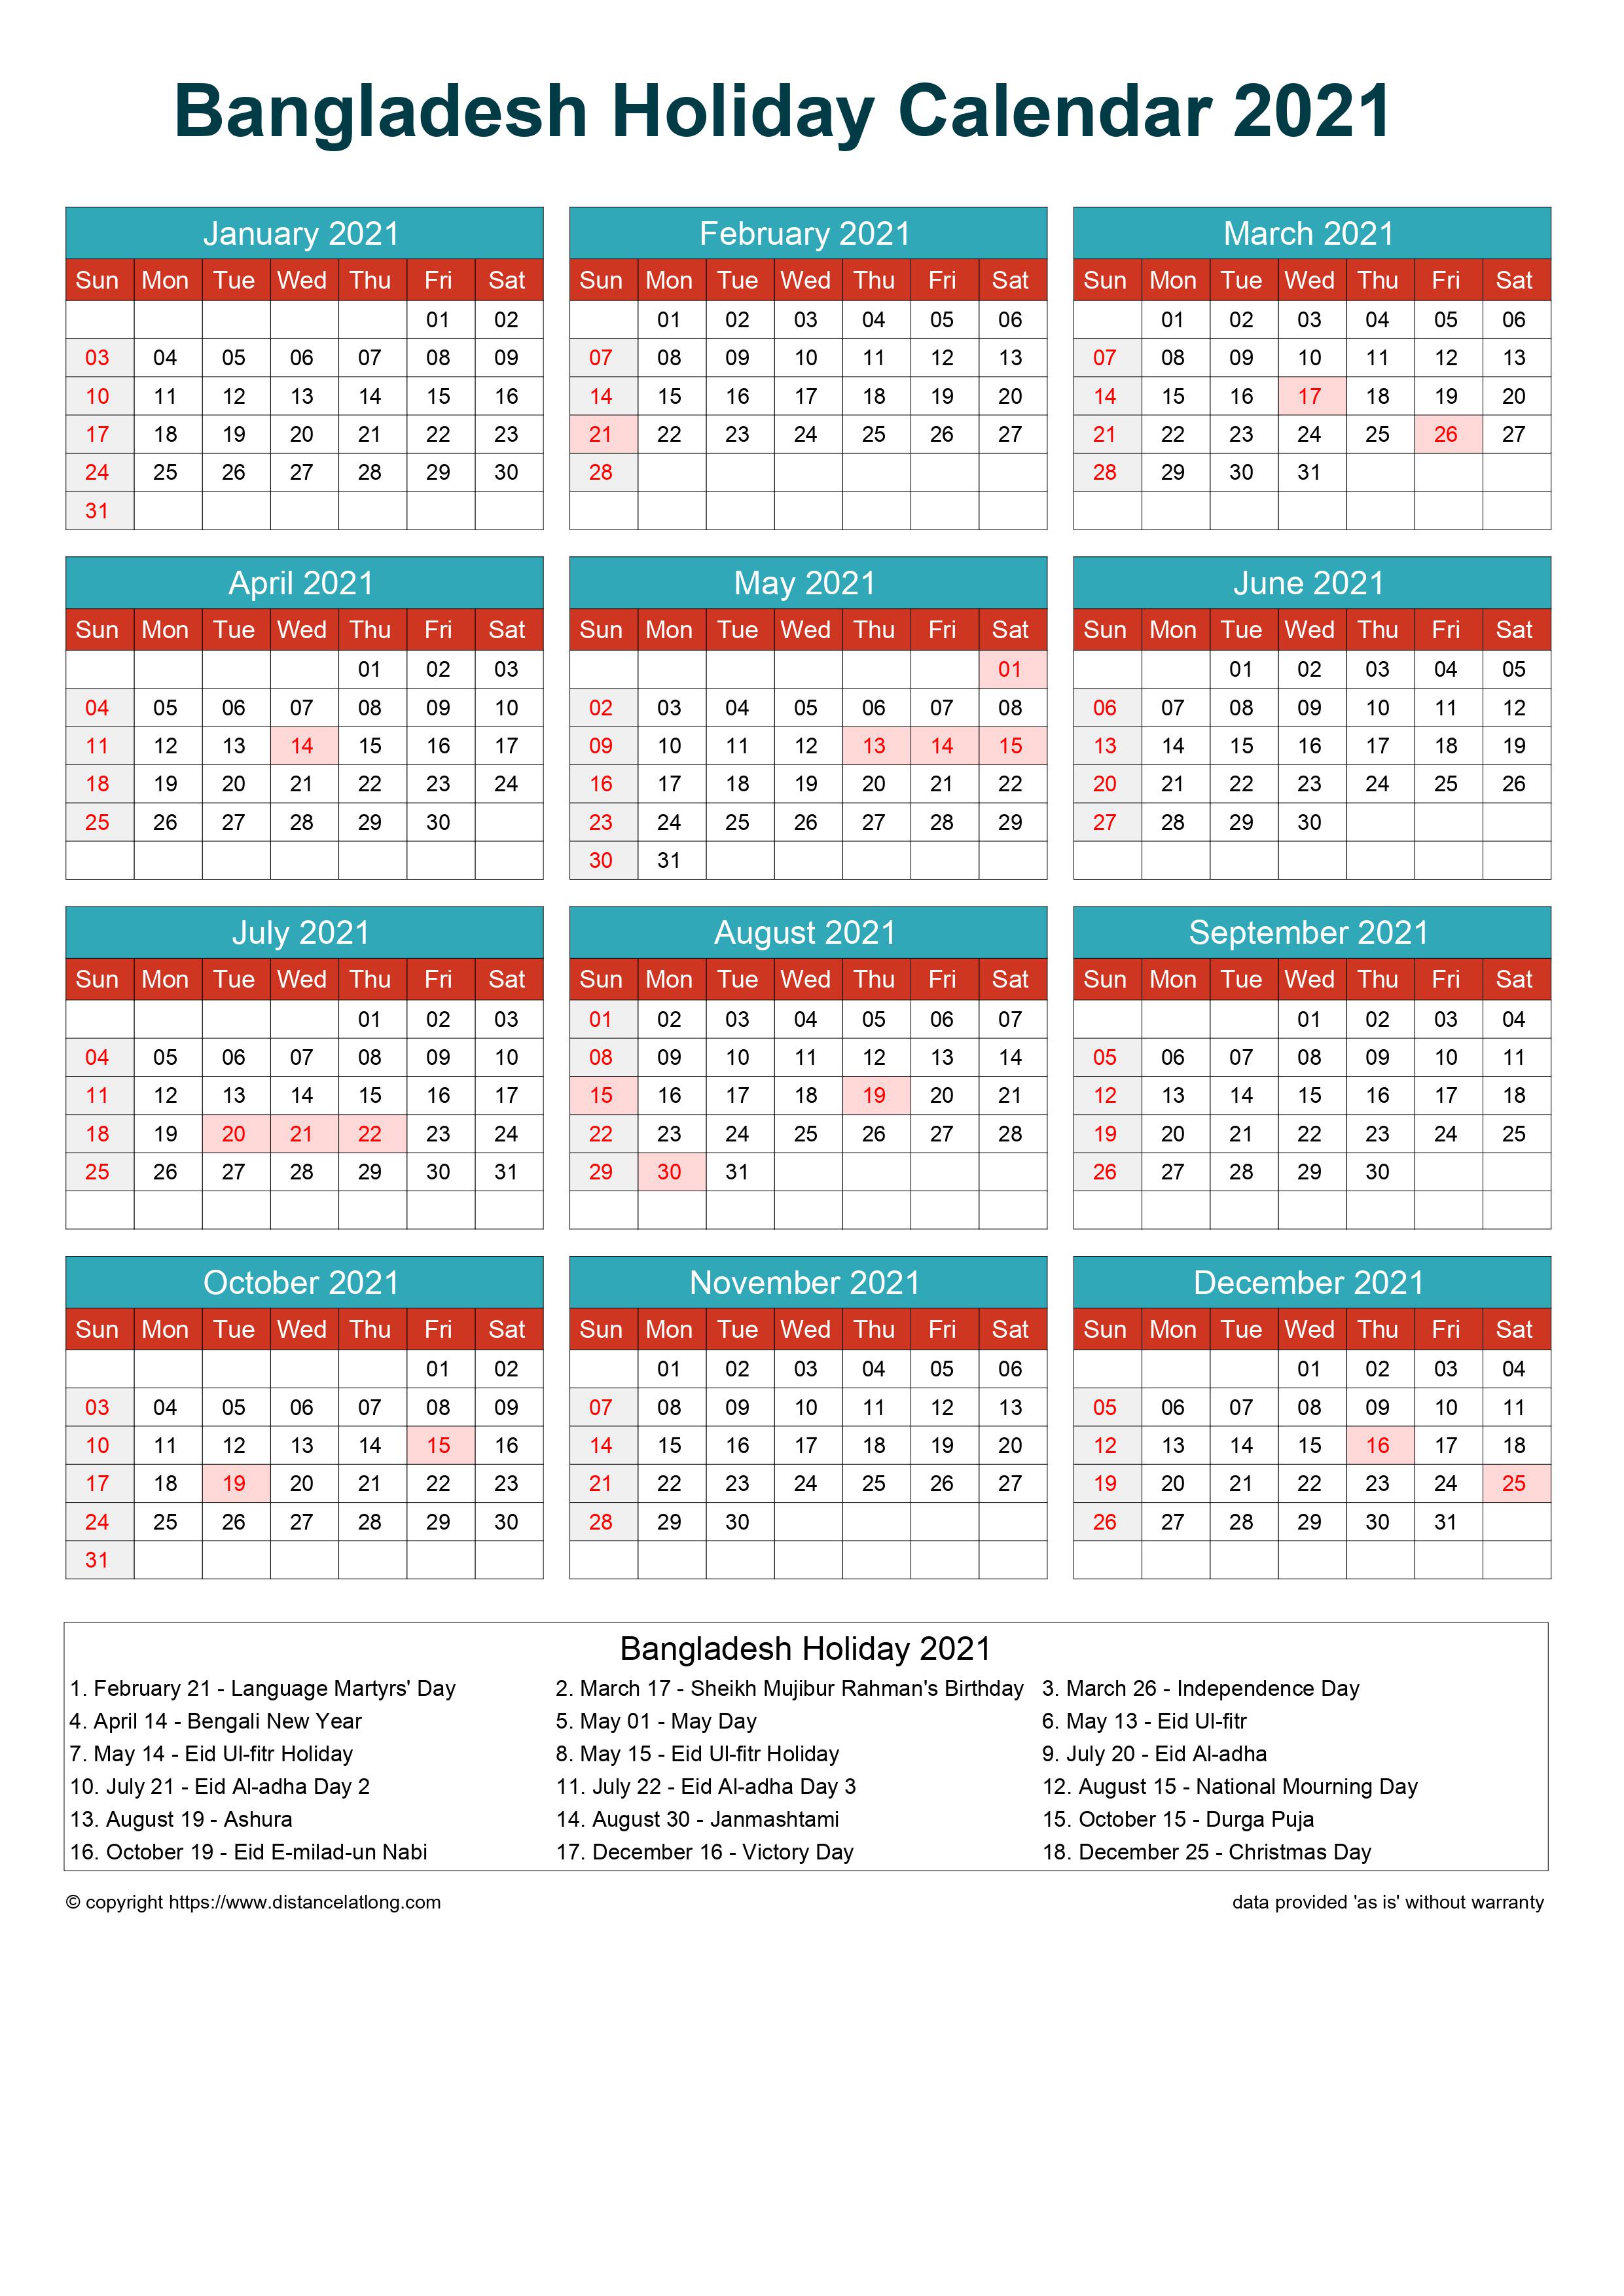 Bangladesh Holiday Calendar 2021 Jpg Templates Distancelatlong Com1